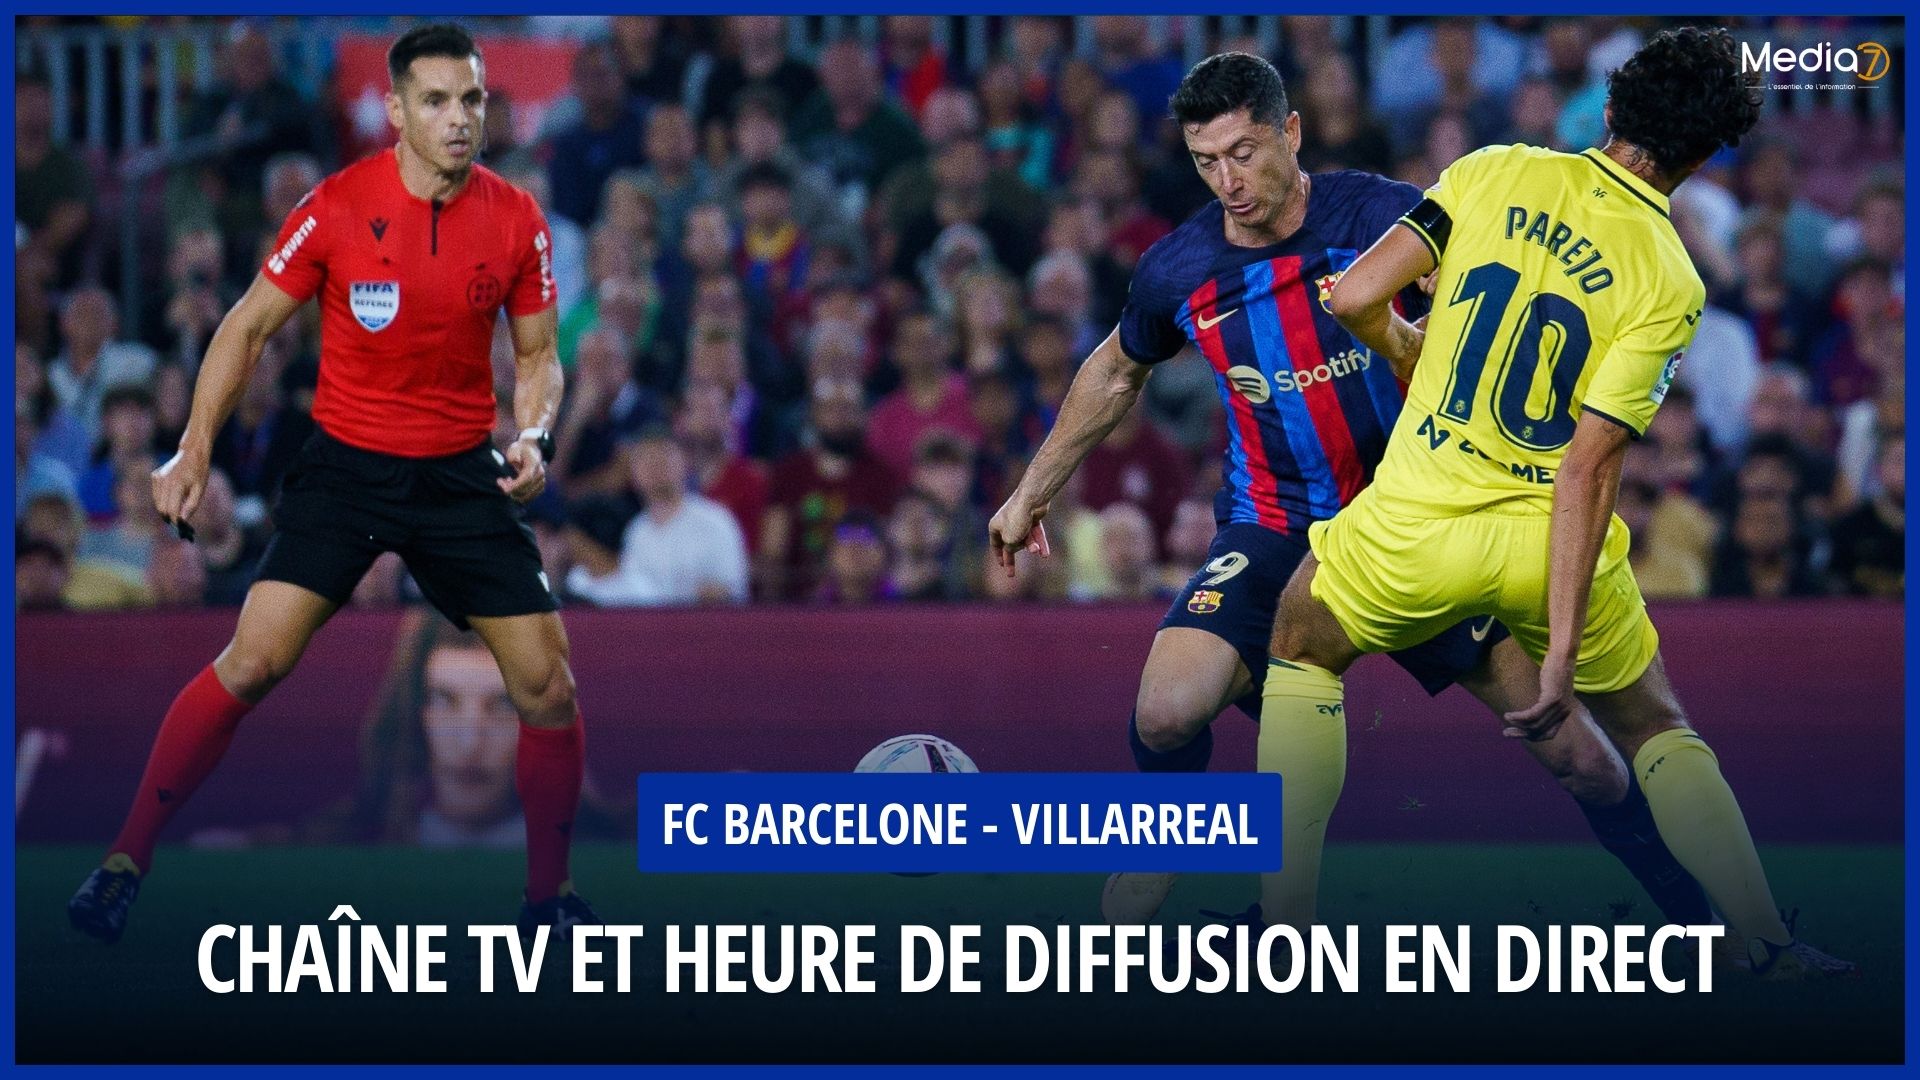 FC Barcelona - Villarreal match live: TV channel and broadcast time - Media7